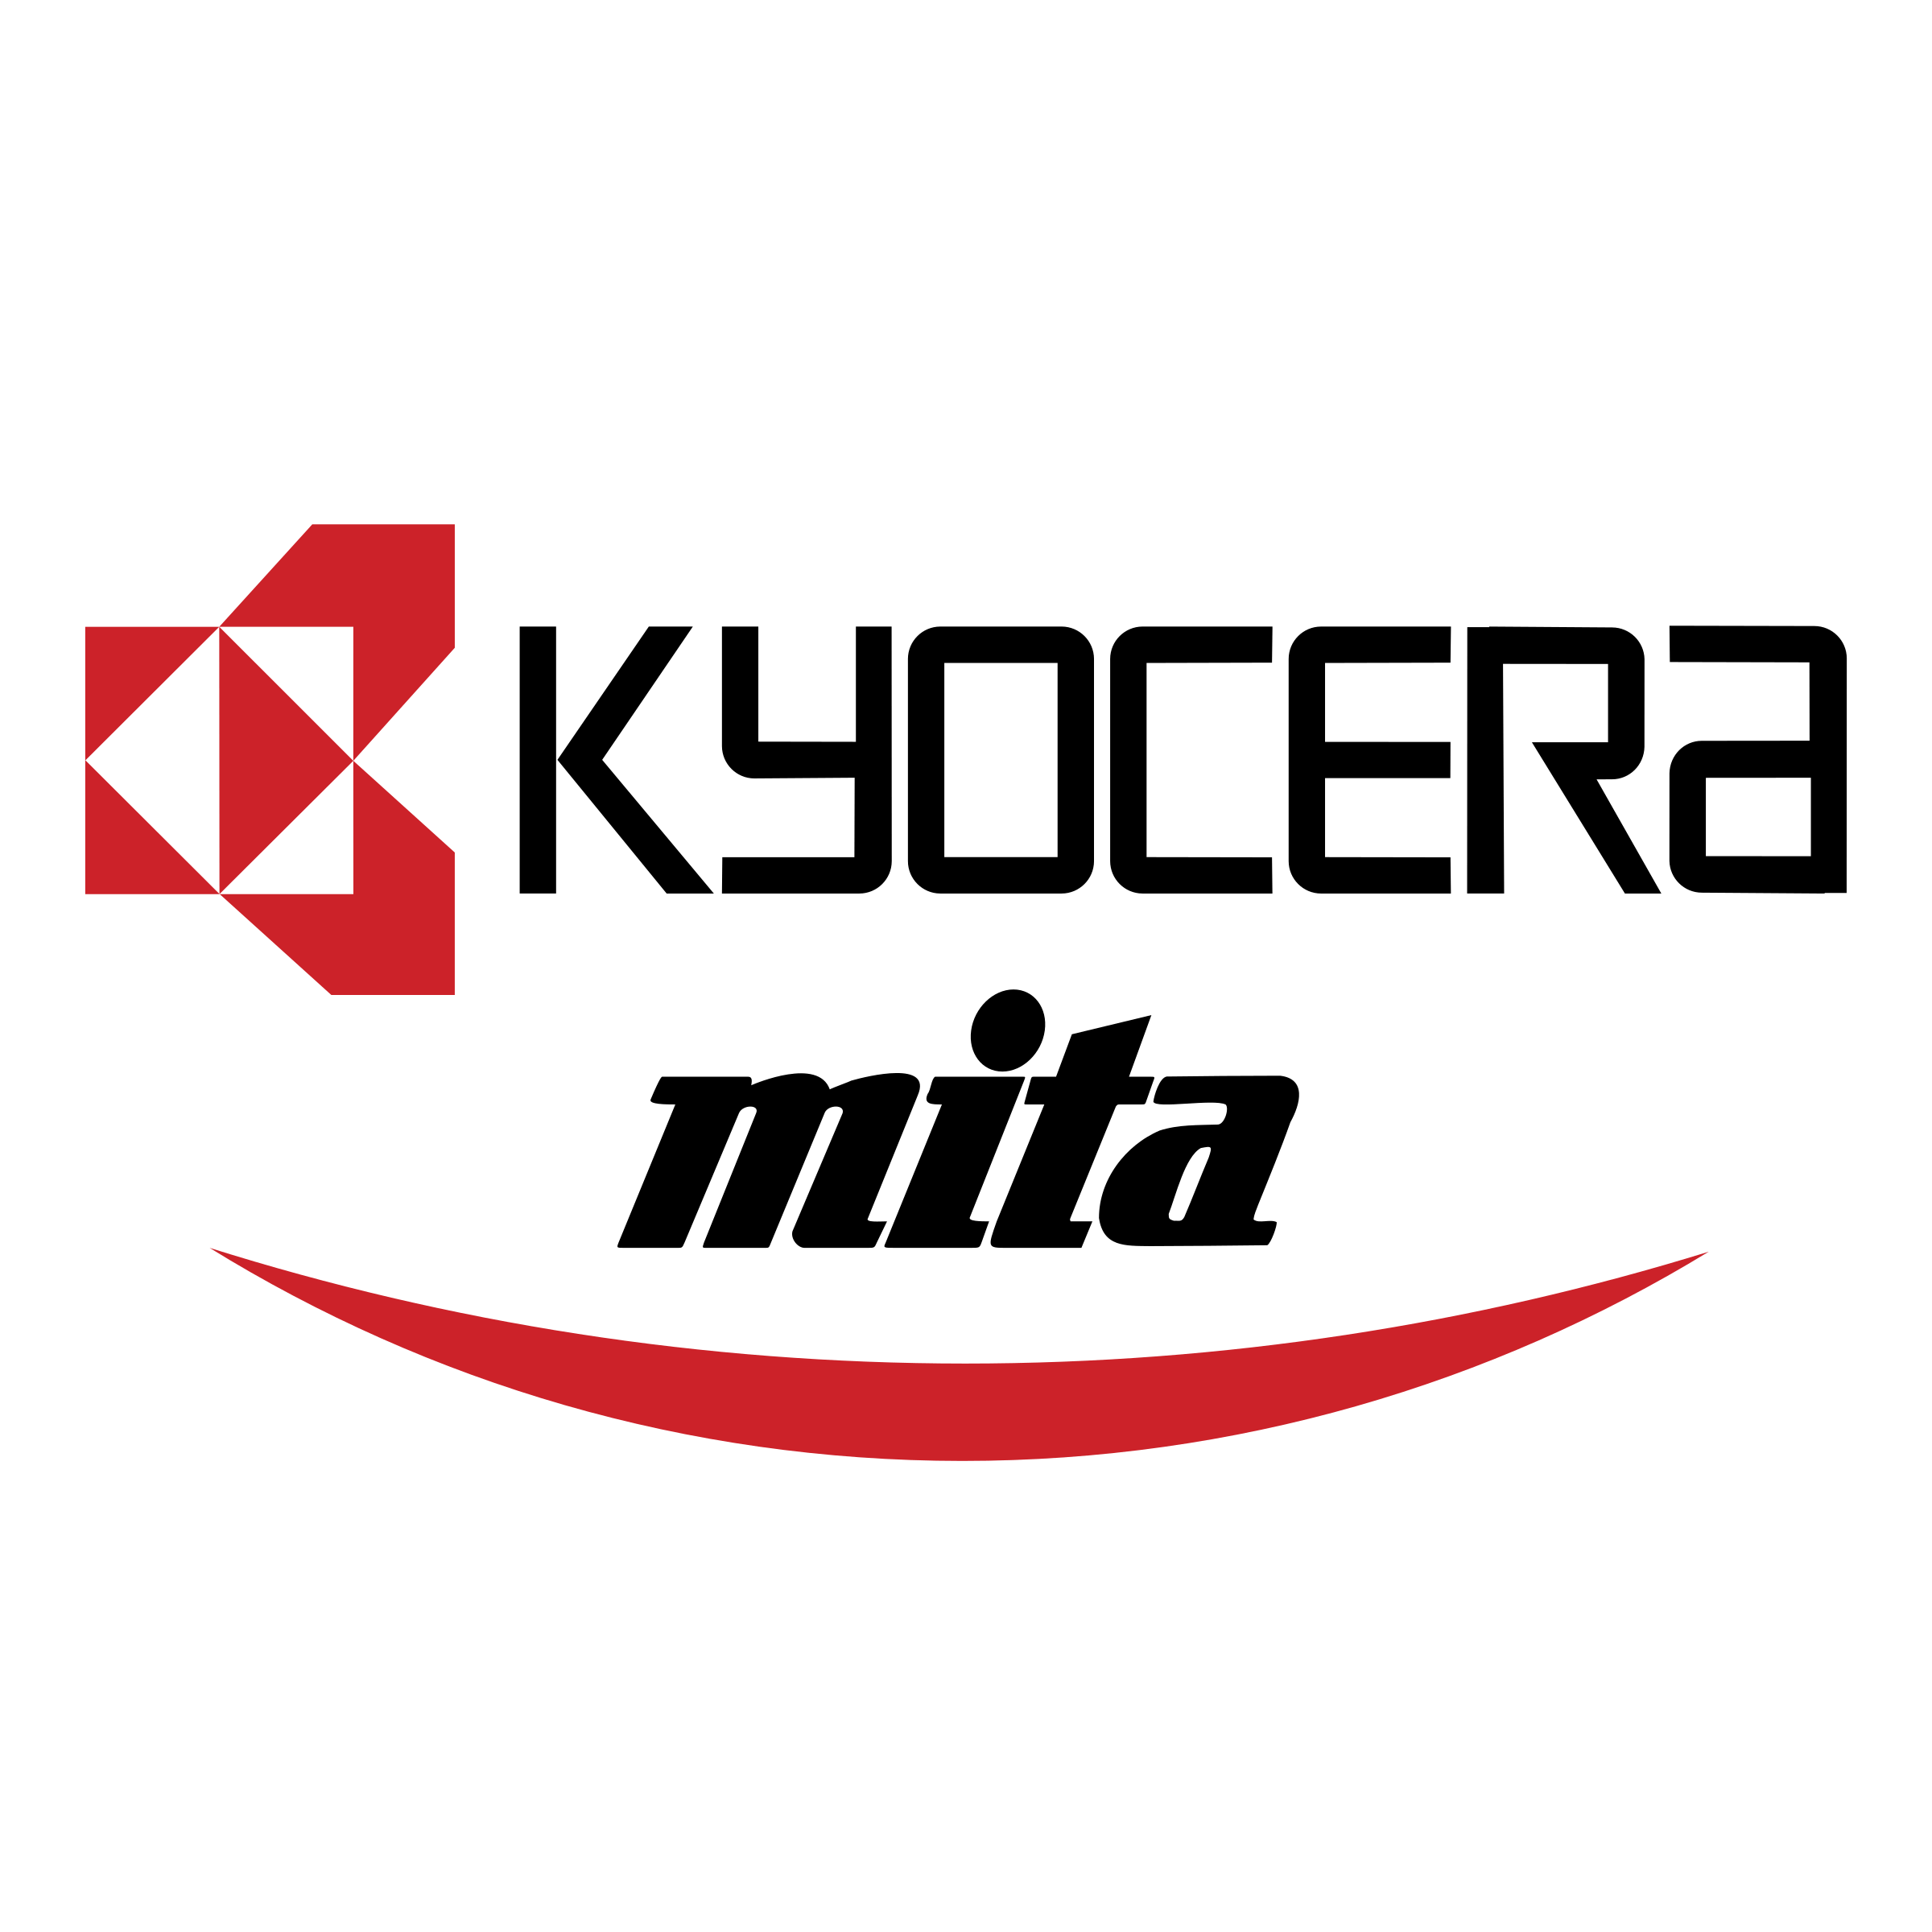 KYOCERA Document Solutions India on LinkedIn: #kyocera #capturing #business